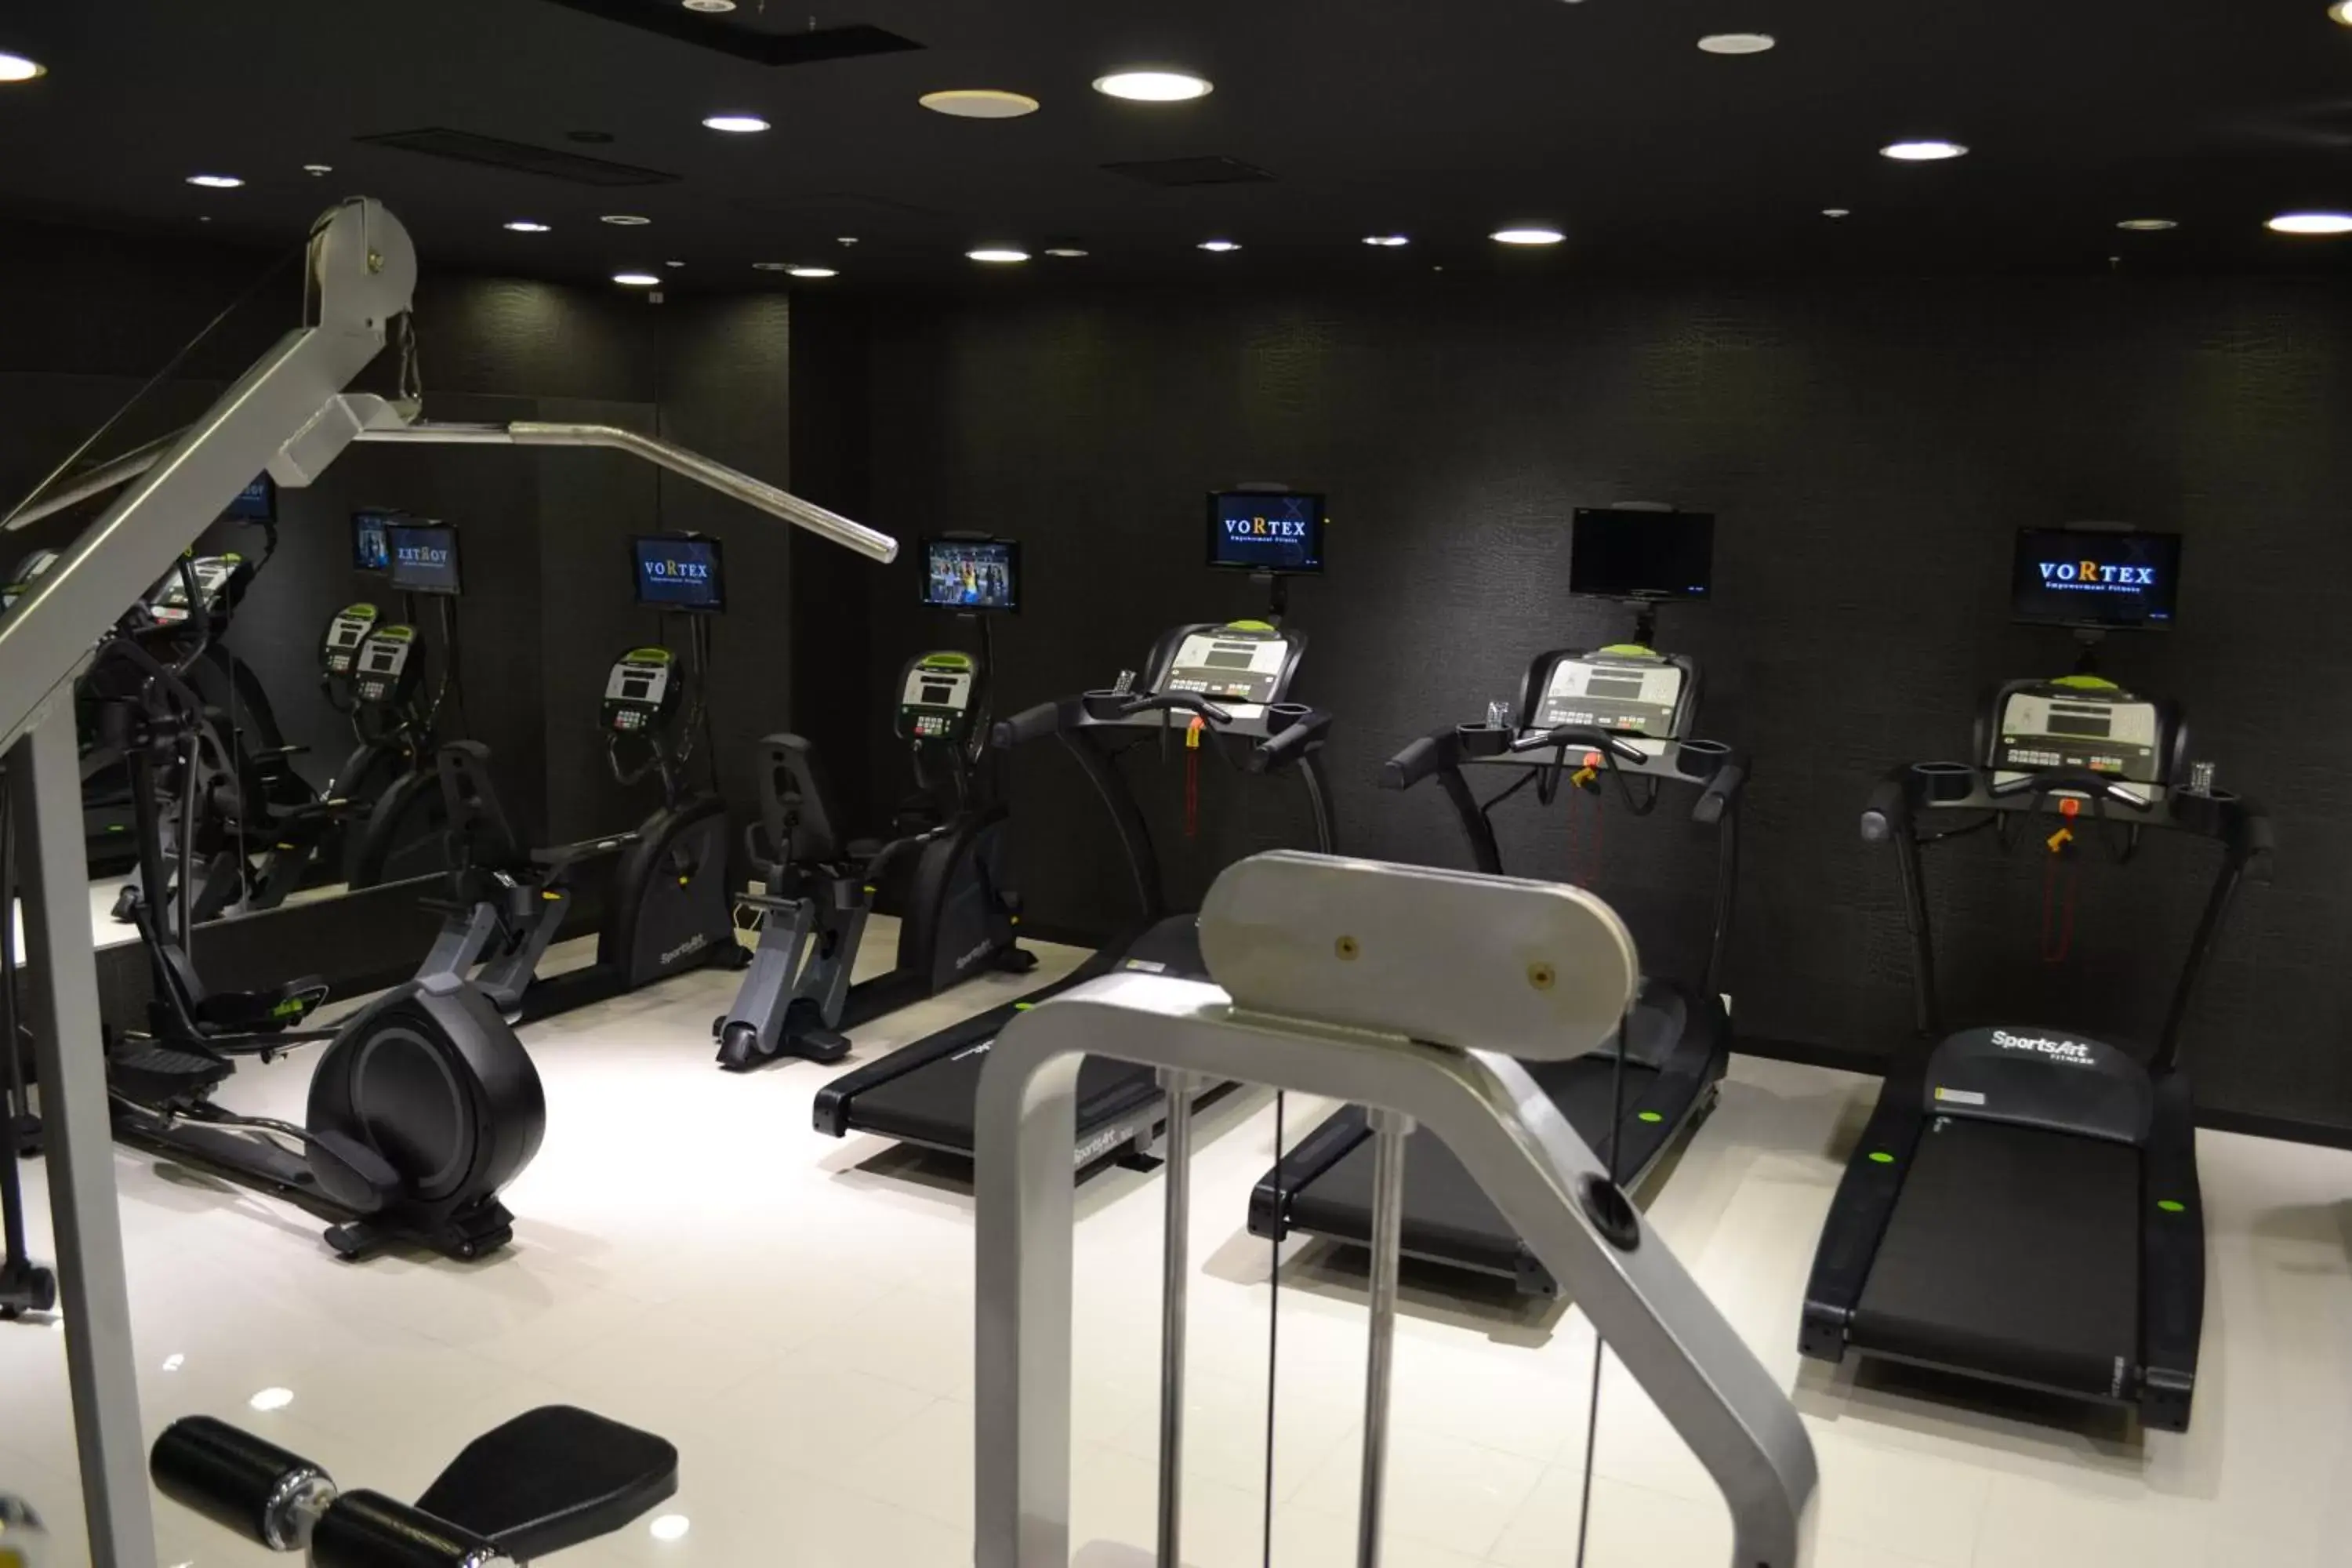 Fitness centre/facilities, Fitness Center/Facilities in ANA Crowne Plaza Matsuyama, an IHG Hotel